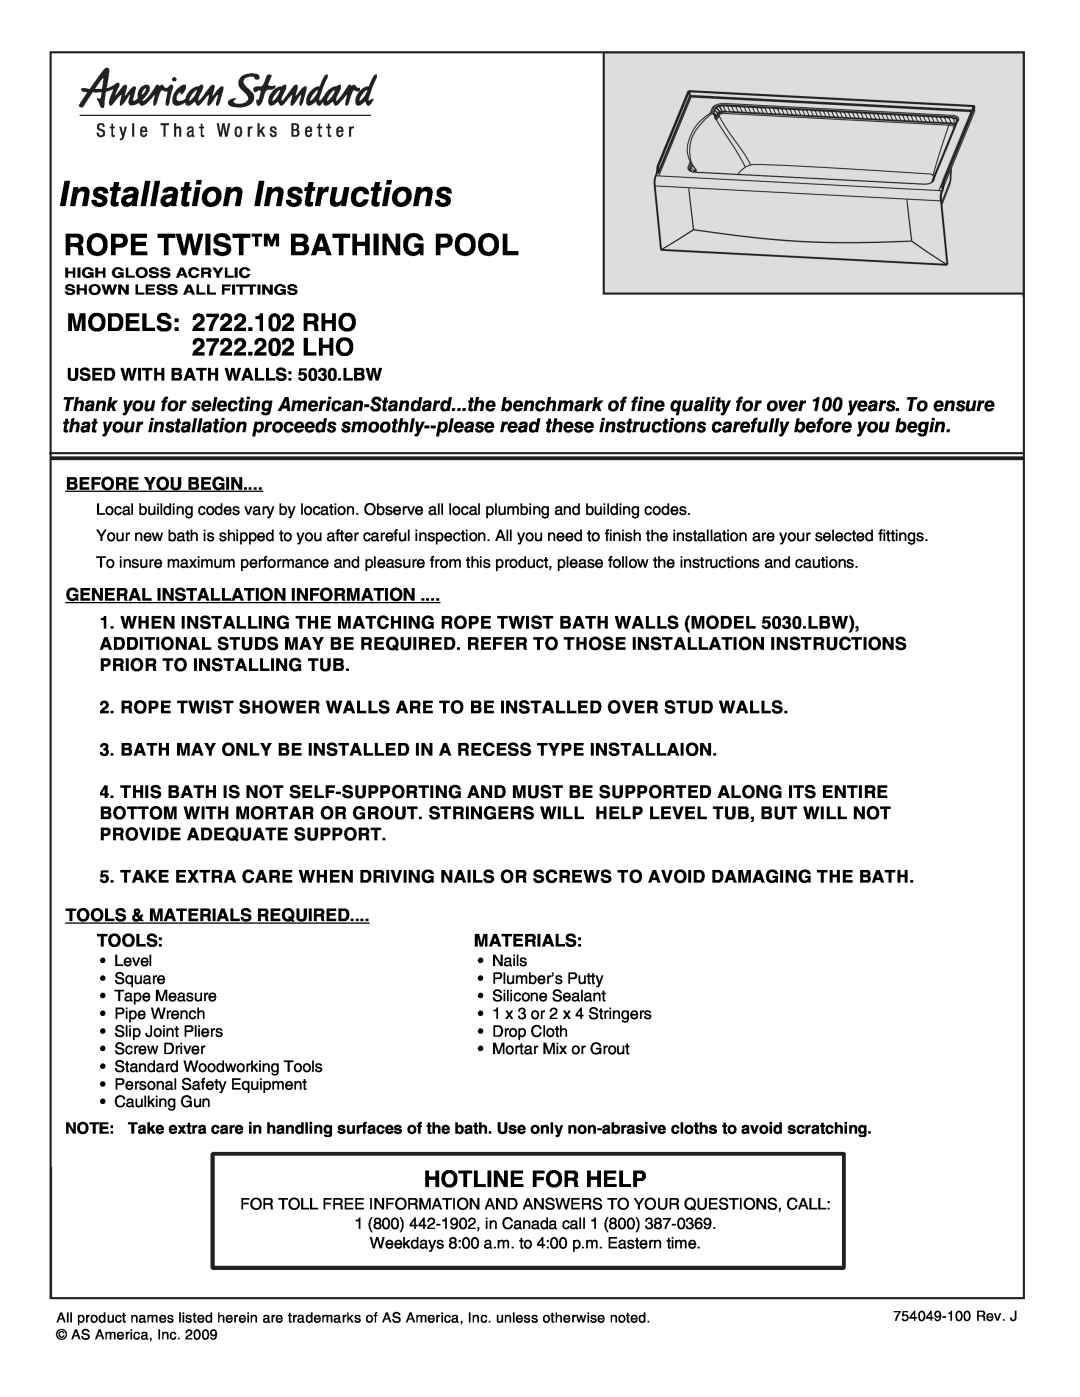 American Standard Rope Twist Bathing Pool, 2722.102 RHO, 2722.202 LHO warranty Installation Instructions, Hotline For Help 